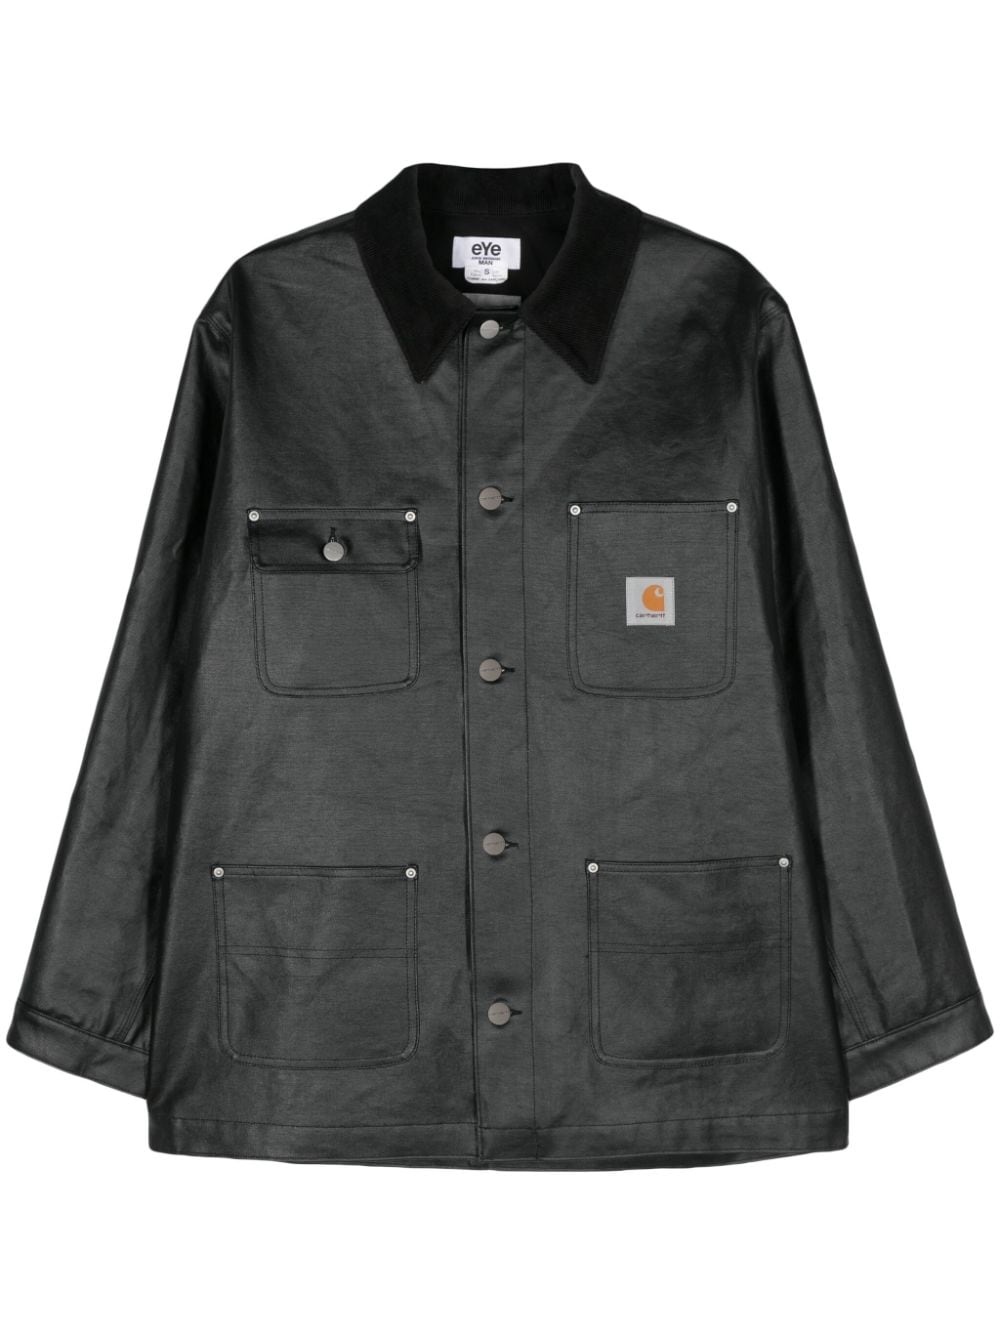 x Carhartt canvas shirt jacket - 1